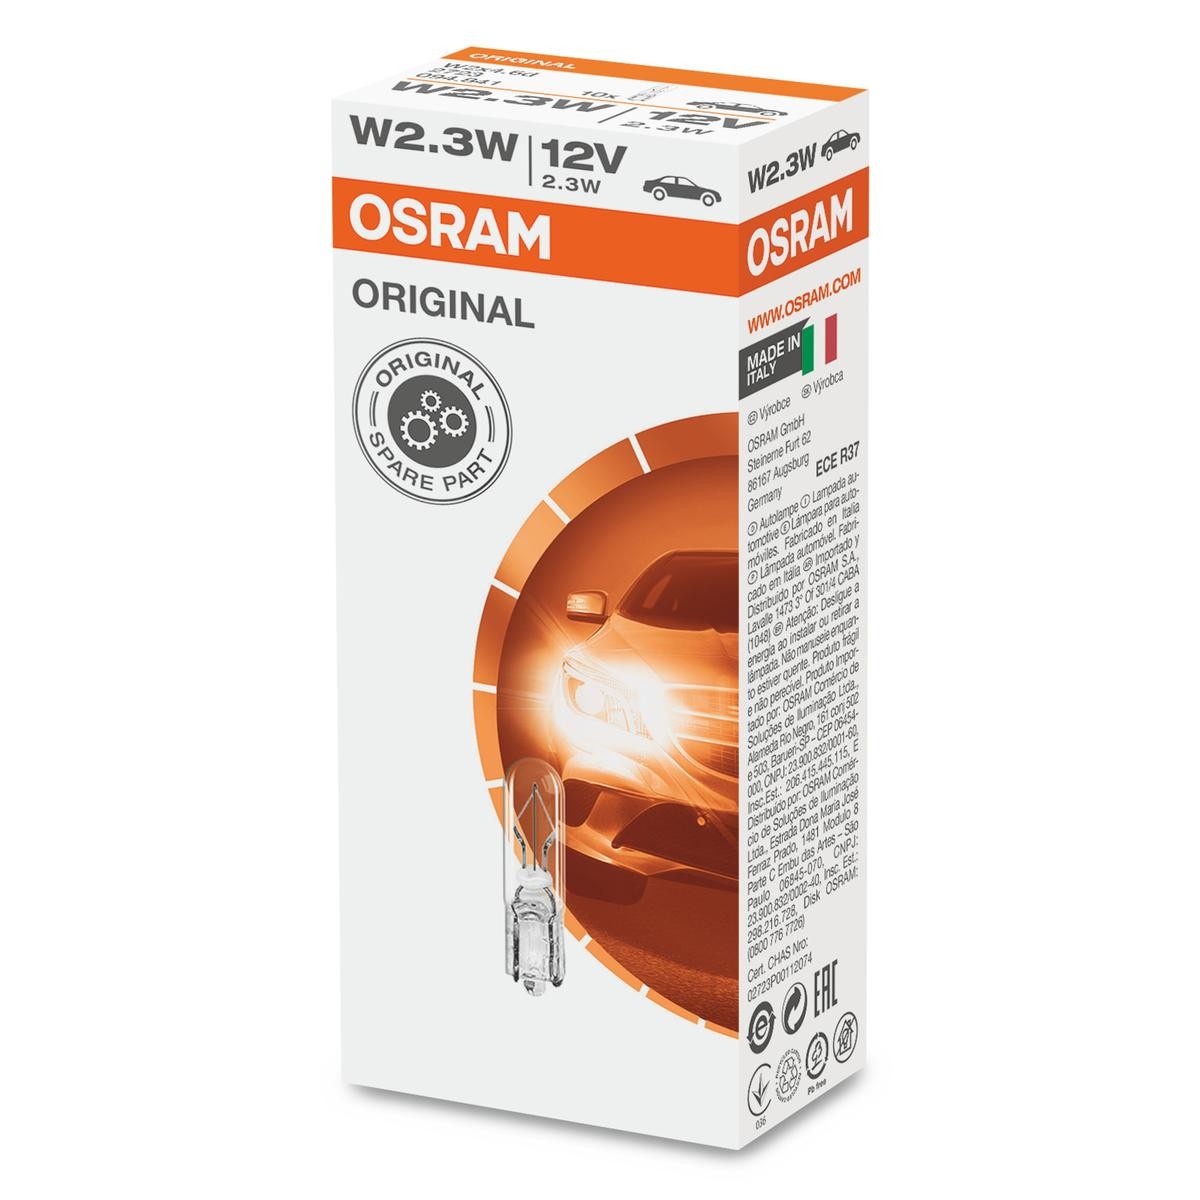 Original 2723 OSRAM Lighting controls experience and price